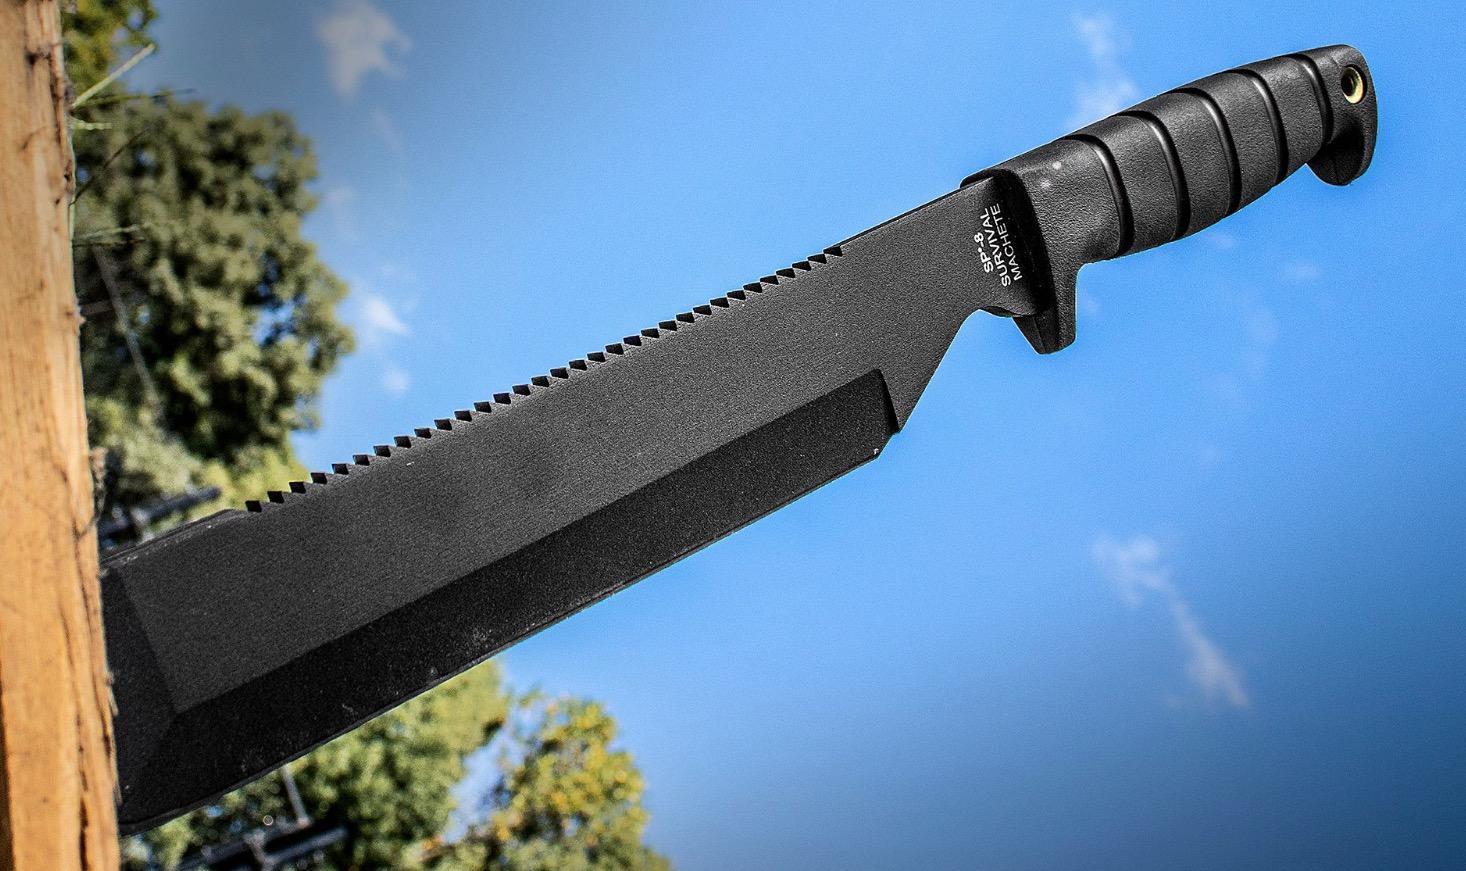 Ontario Knife Co. SP8 Machete Survival 10" Sawback Blade Cordura and Leather Sheath Black - $59.97 (Free S/H over $25)